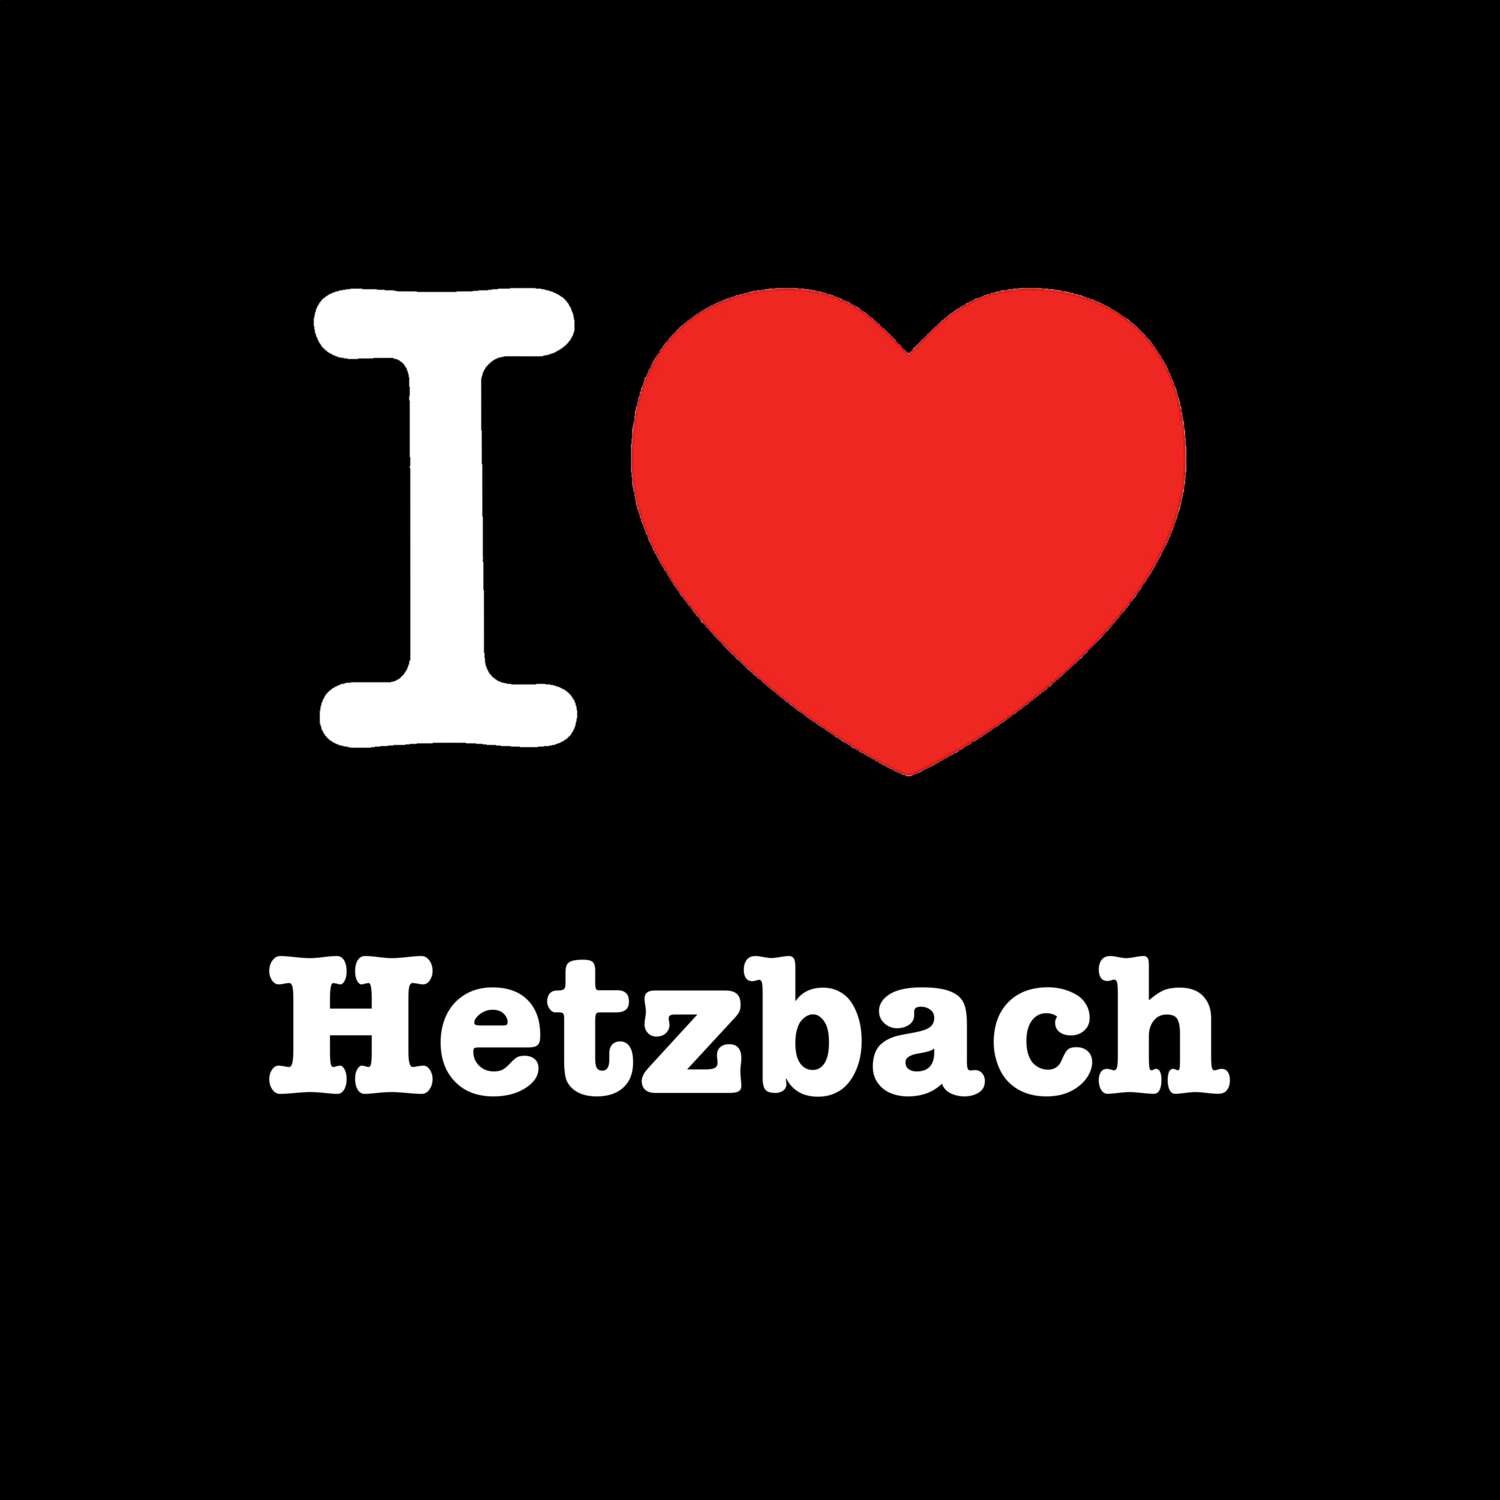 Hetzbach T-Shirt »I love«